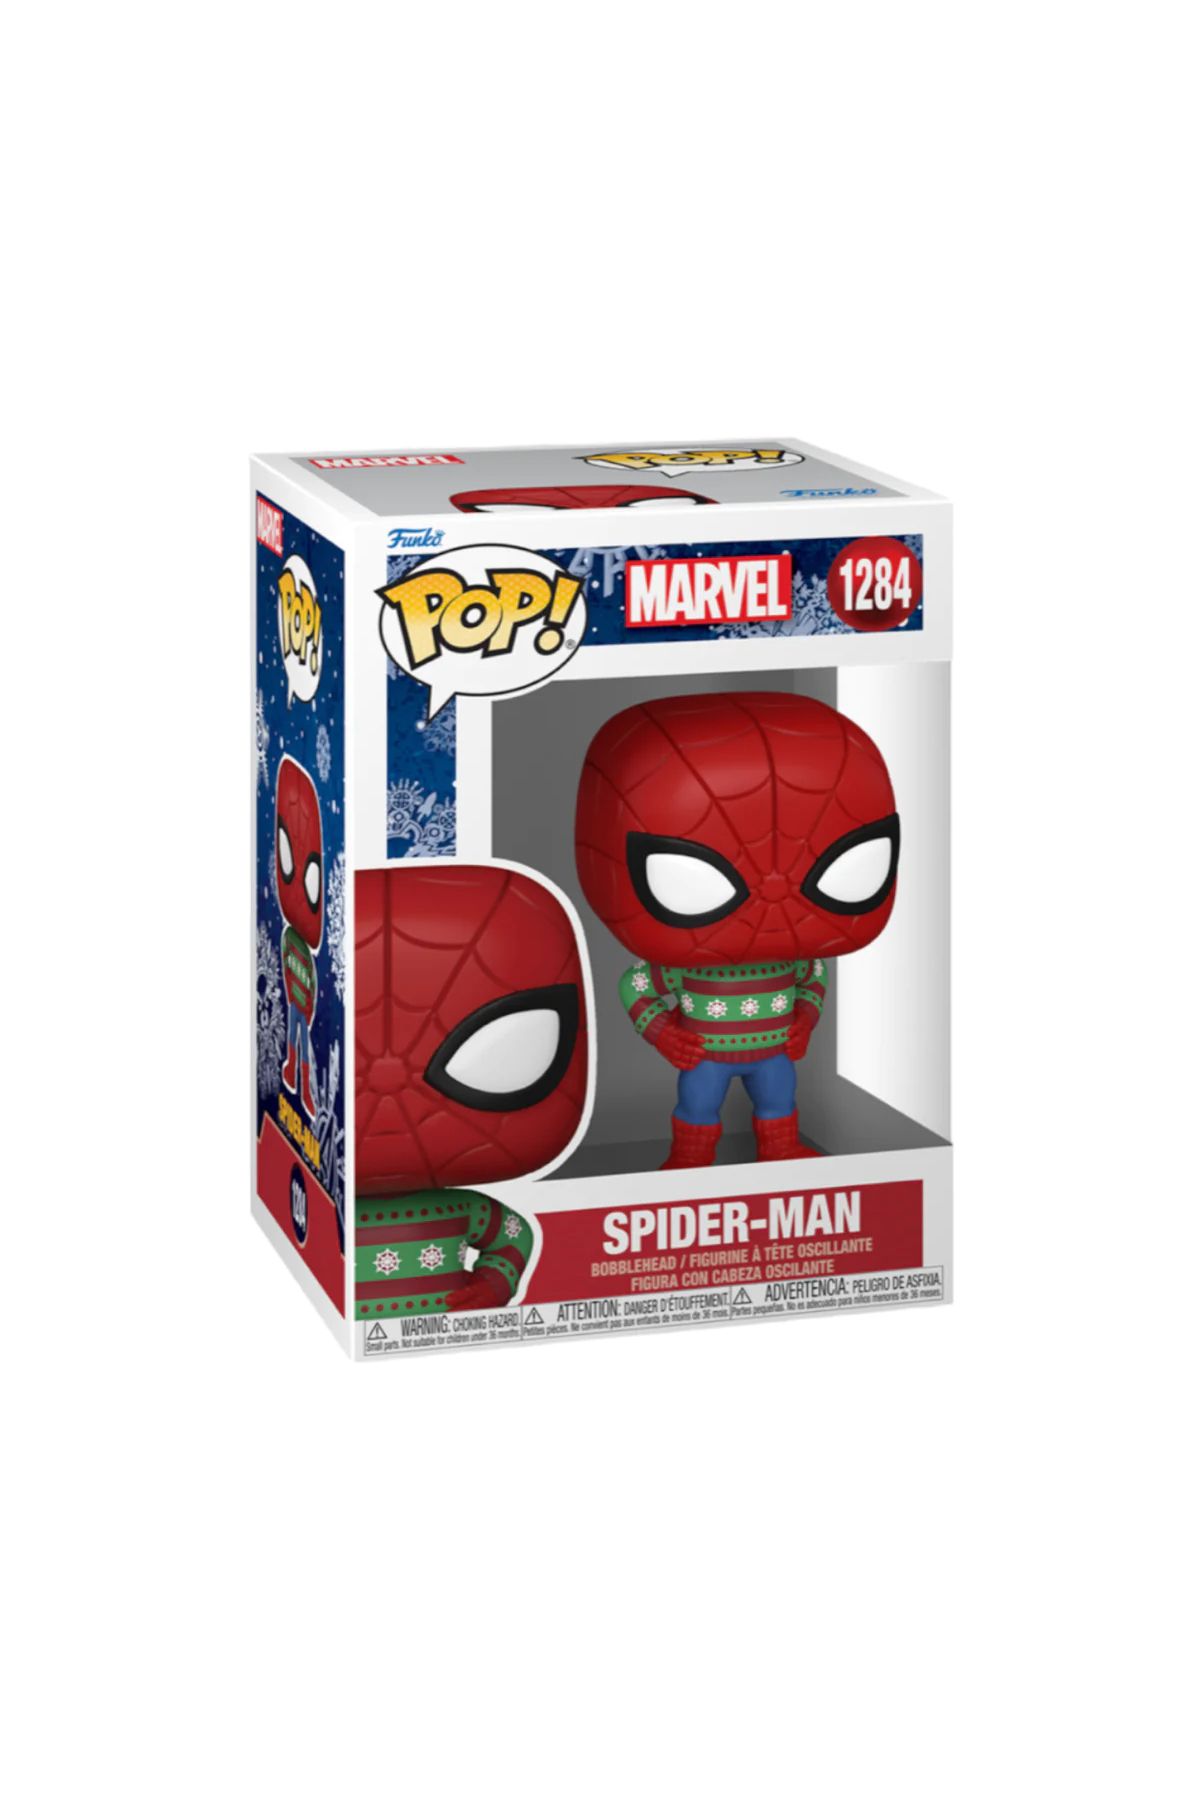 Funko Pop! Marvel: Holiday Spider Man Swtr No:1284 Bobble Head